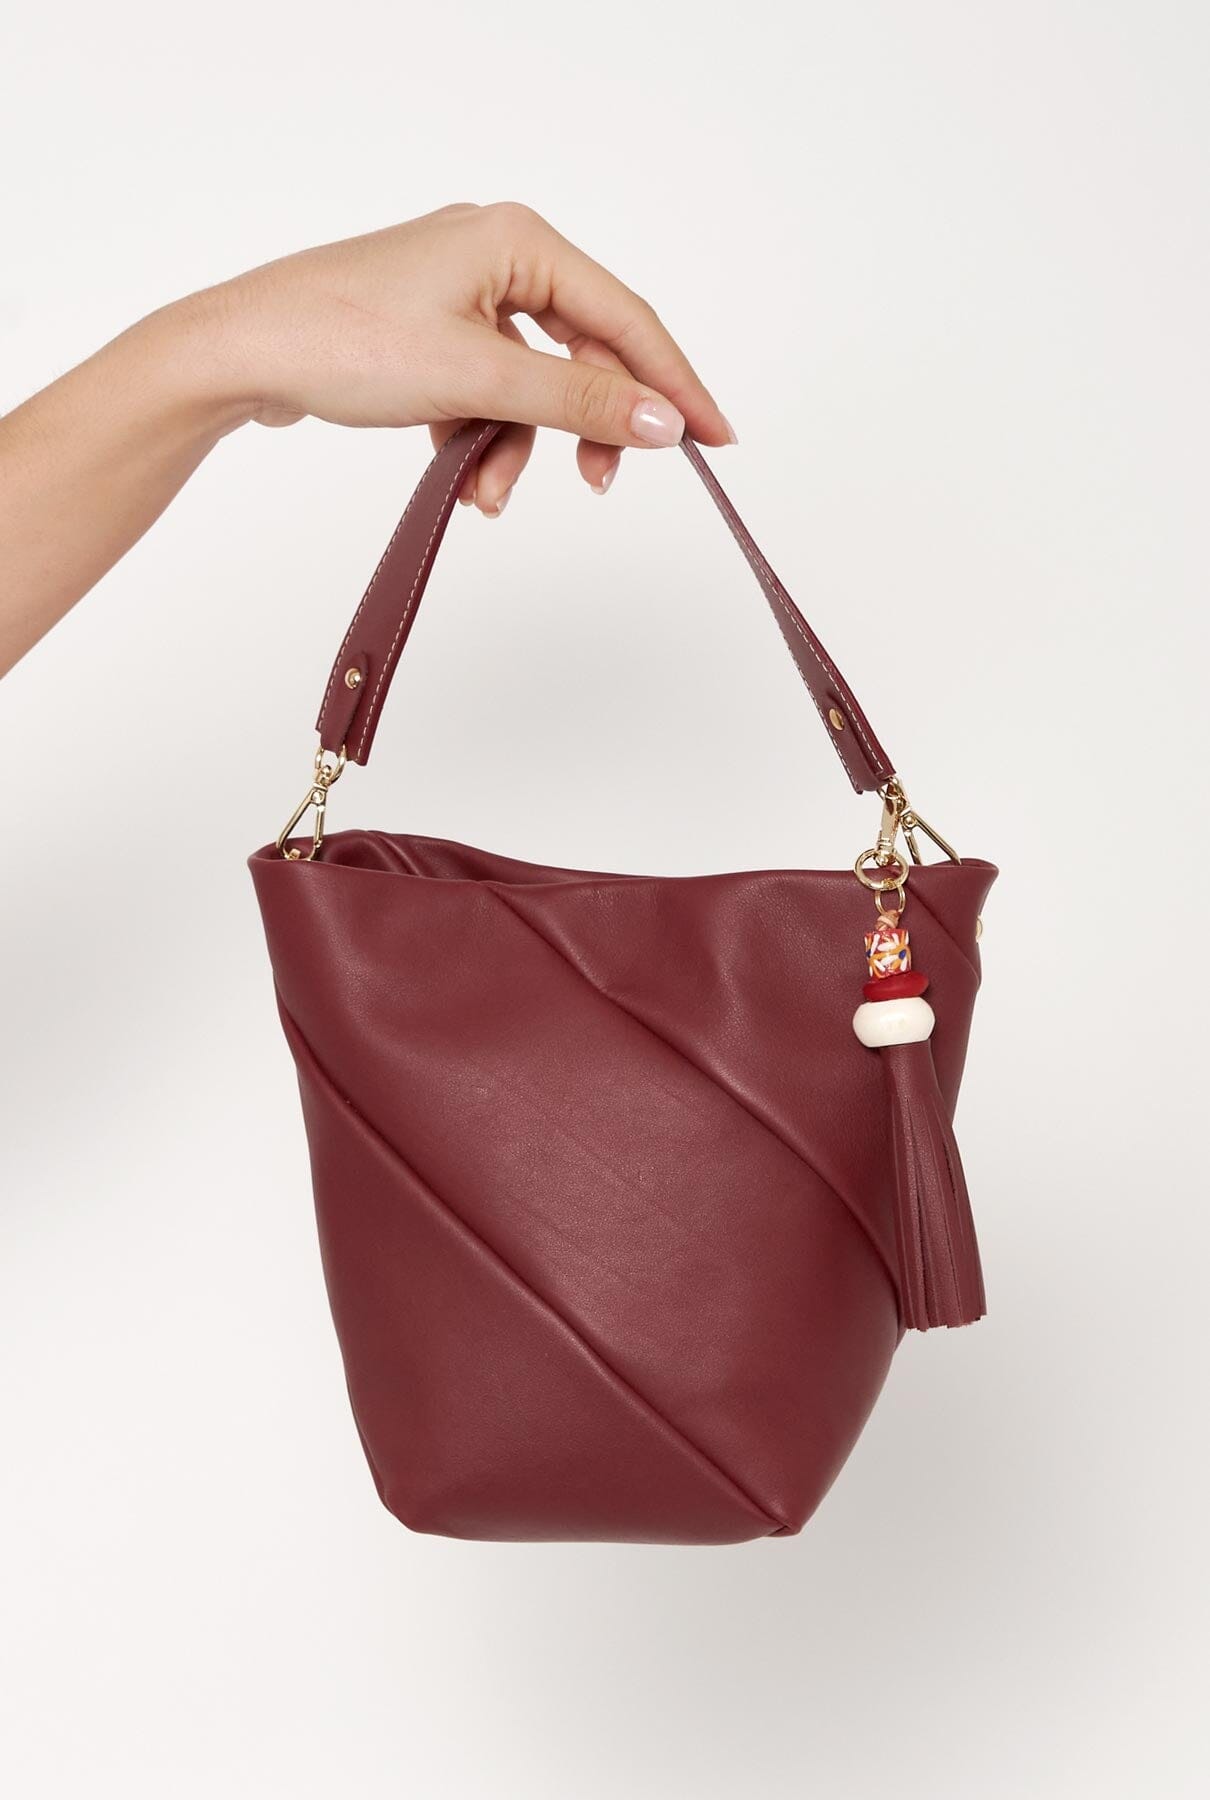 The Mini Lola Bag Burdeos Hand bags The Bag Lab 